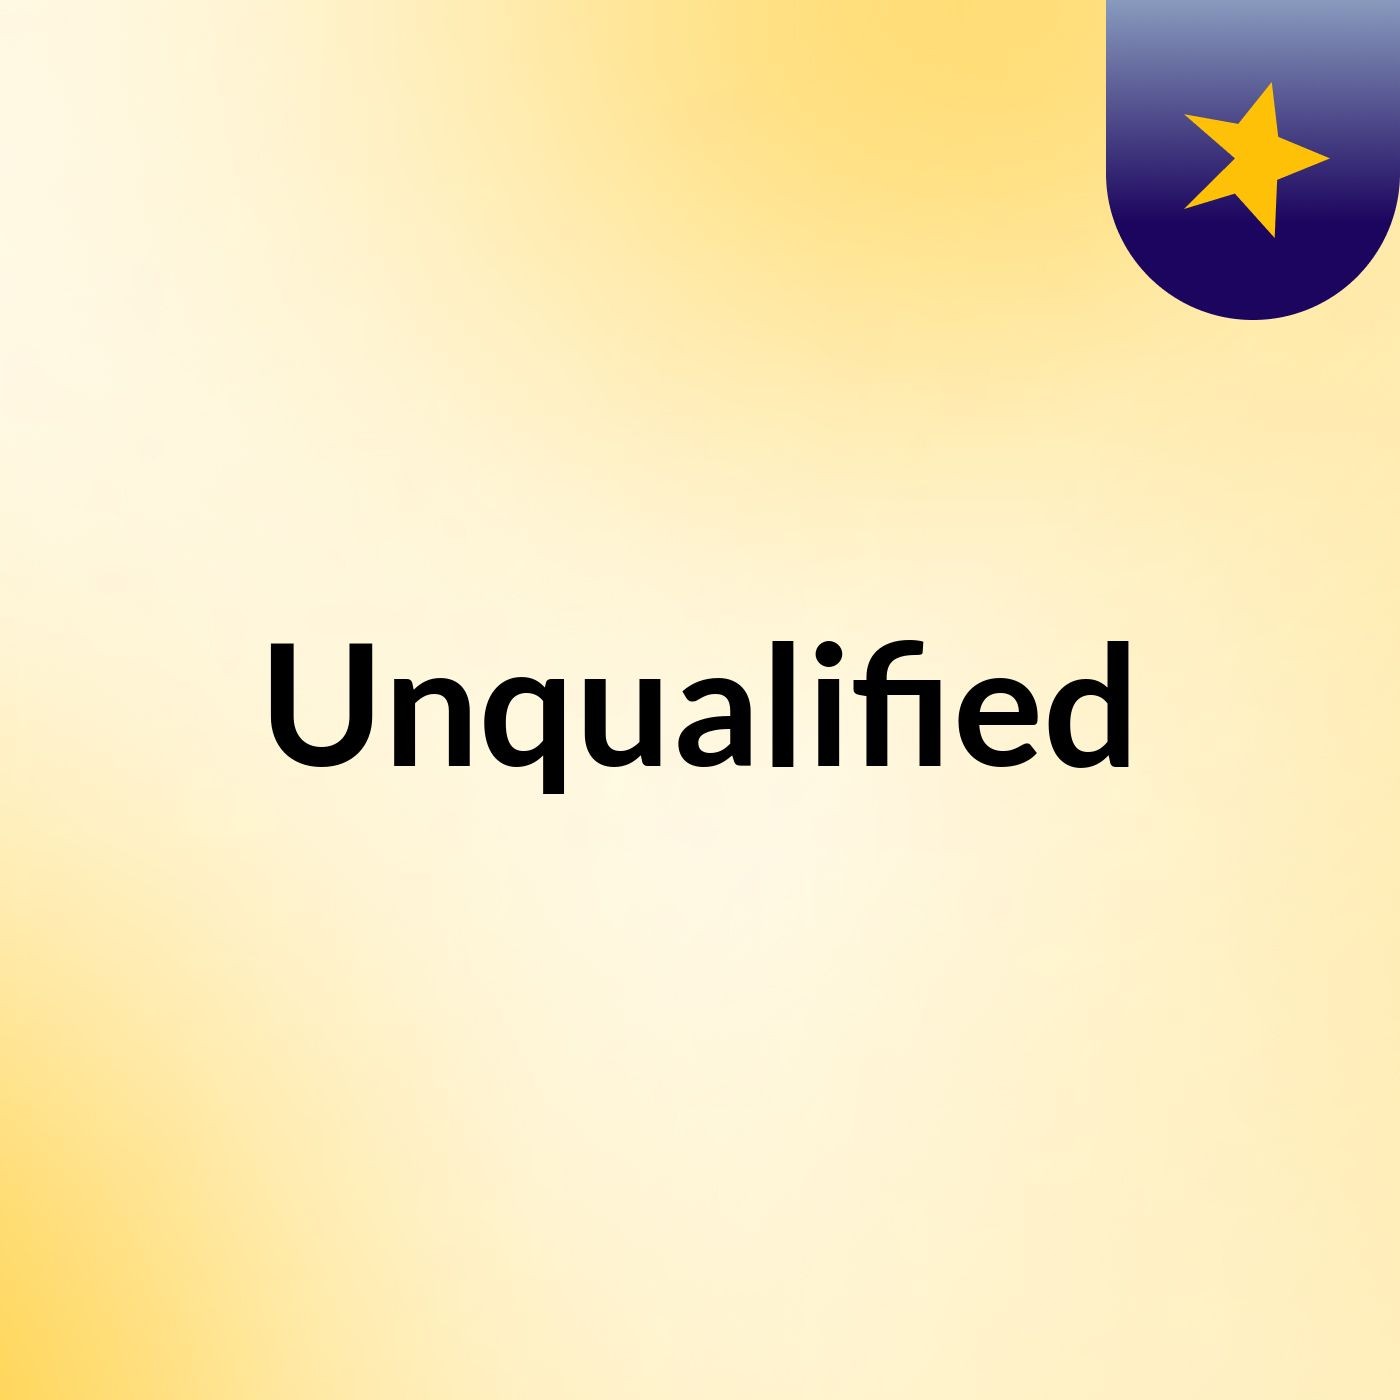 Episode 2 - Unqualified